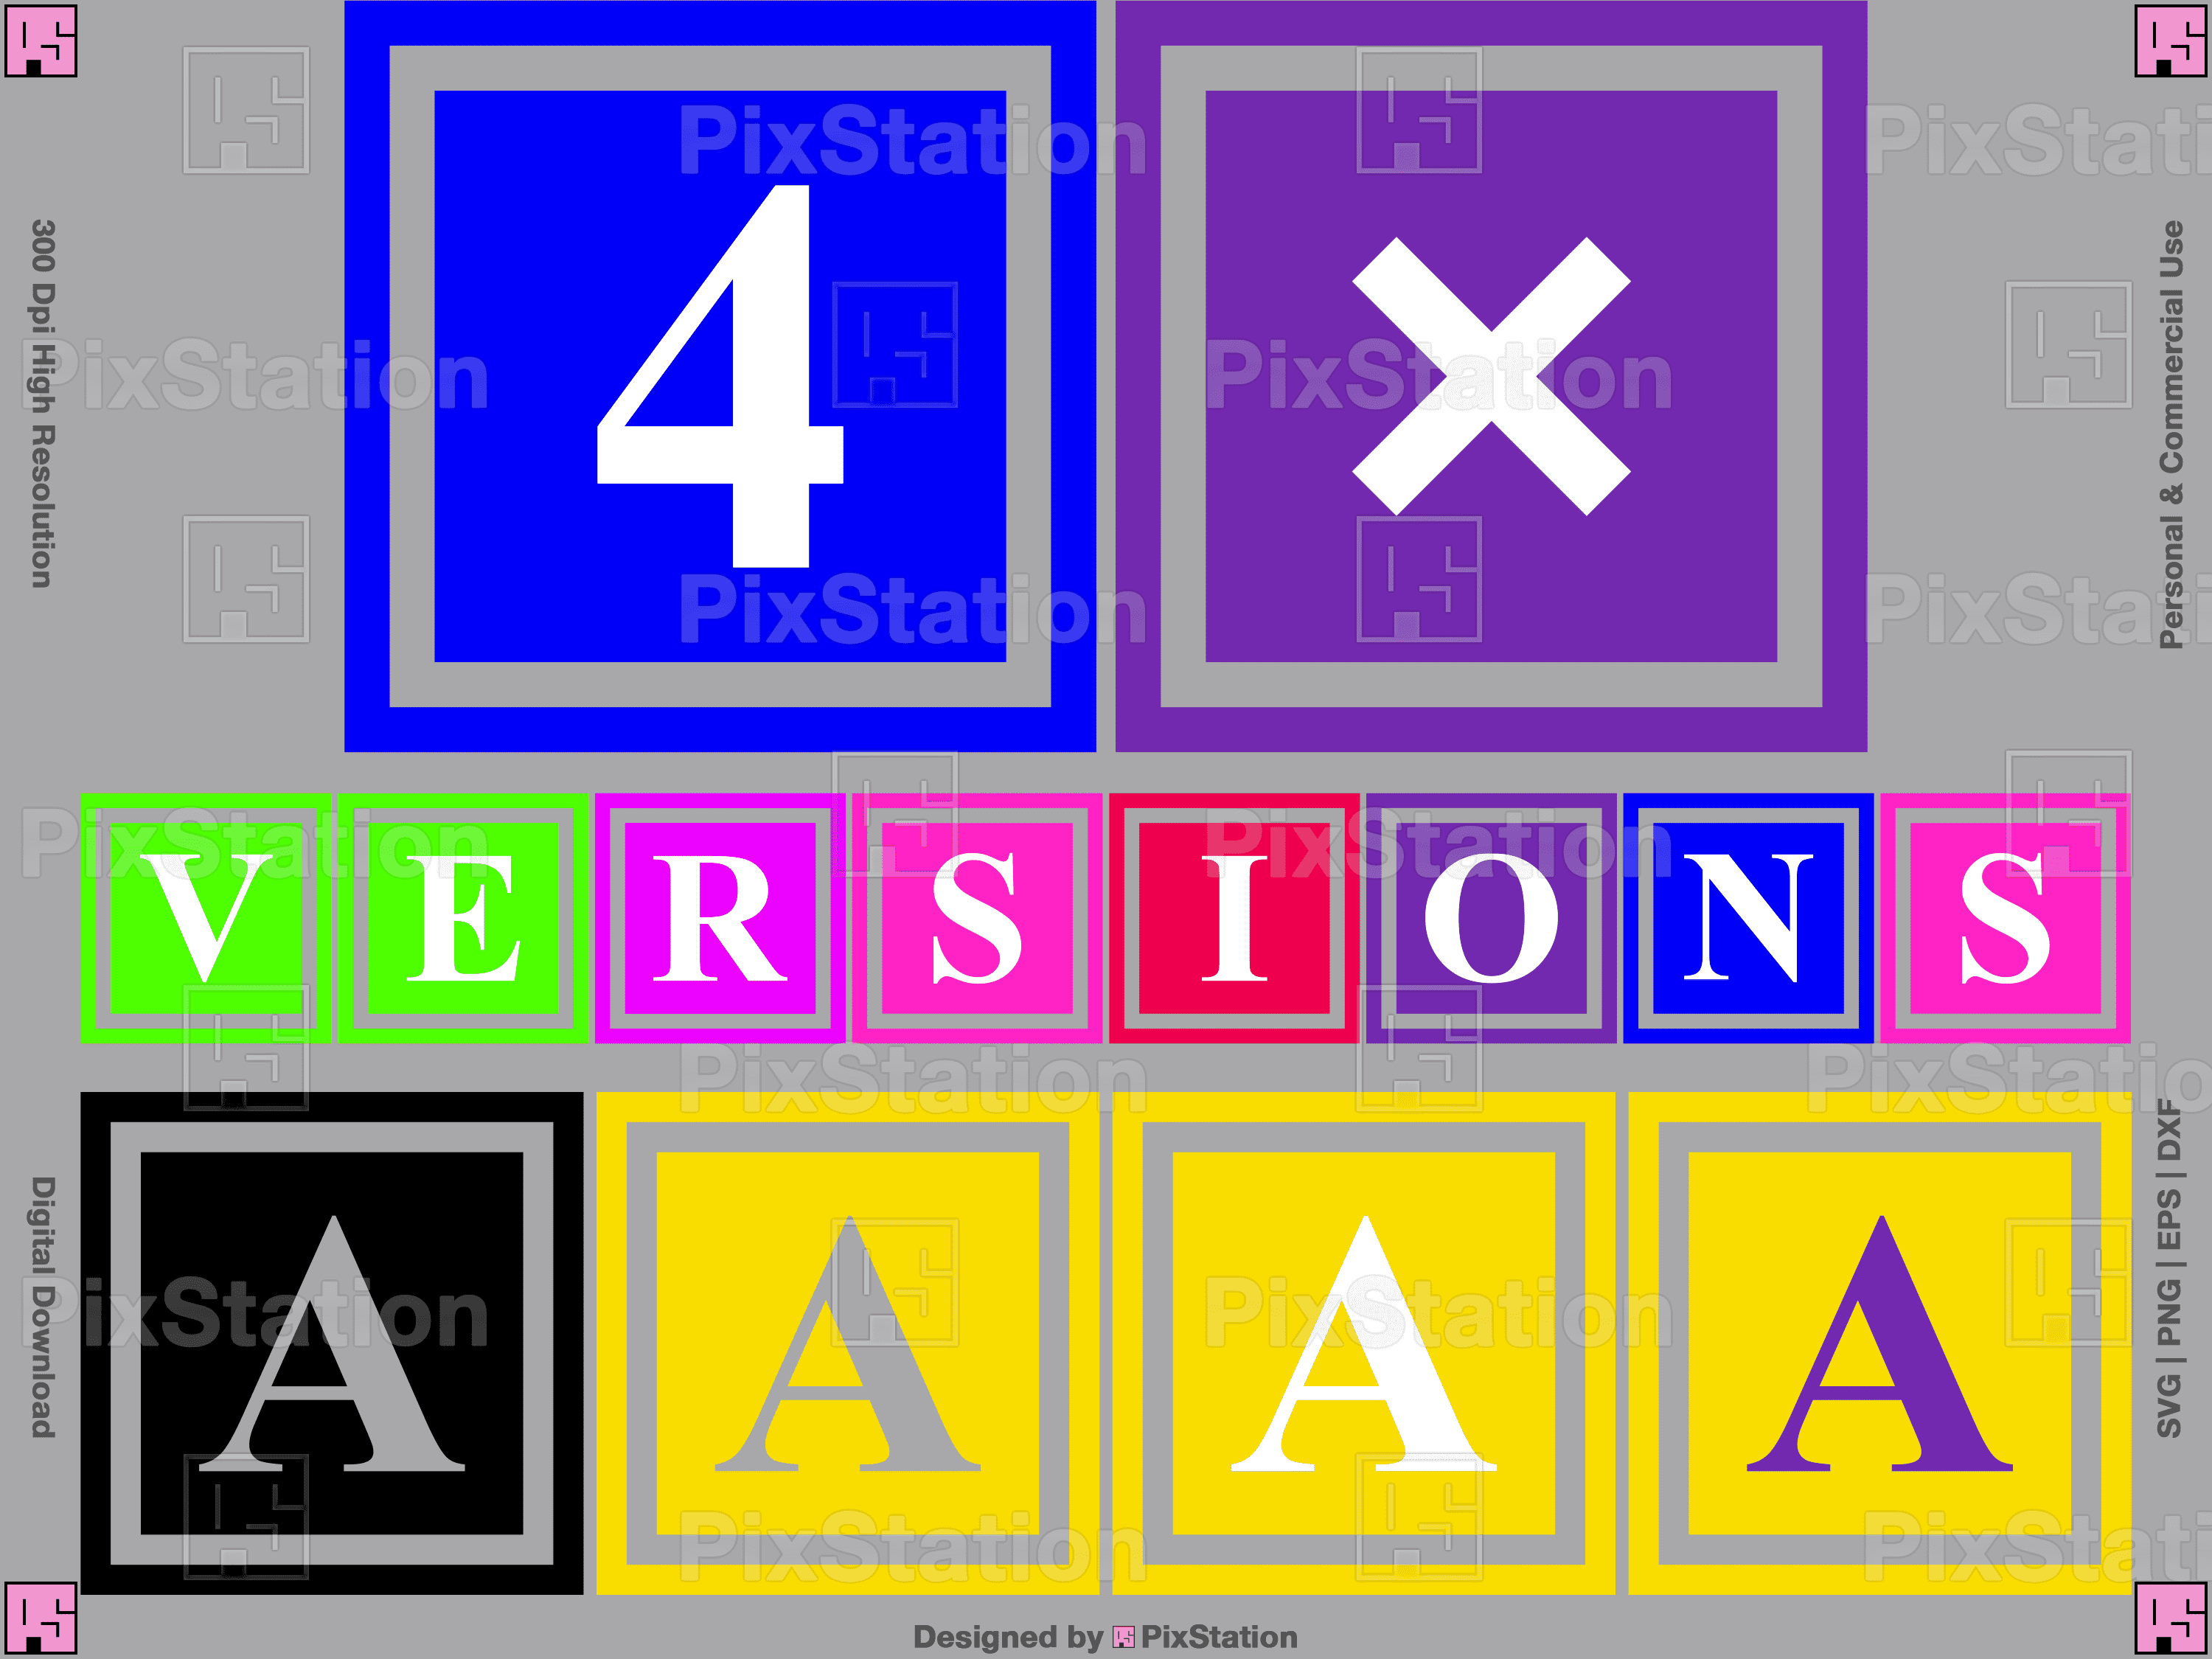 Abc Alphabet Blocks Vector SVG Icon - SVG Repo